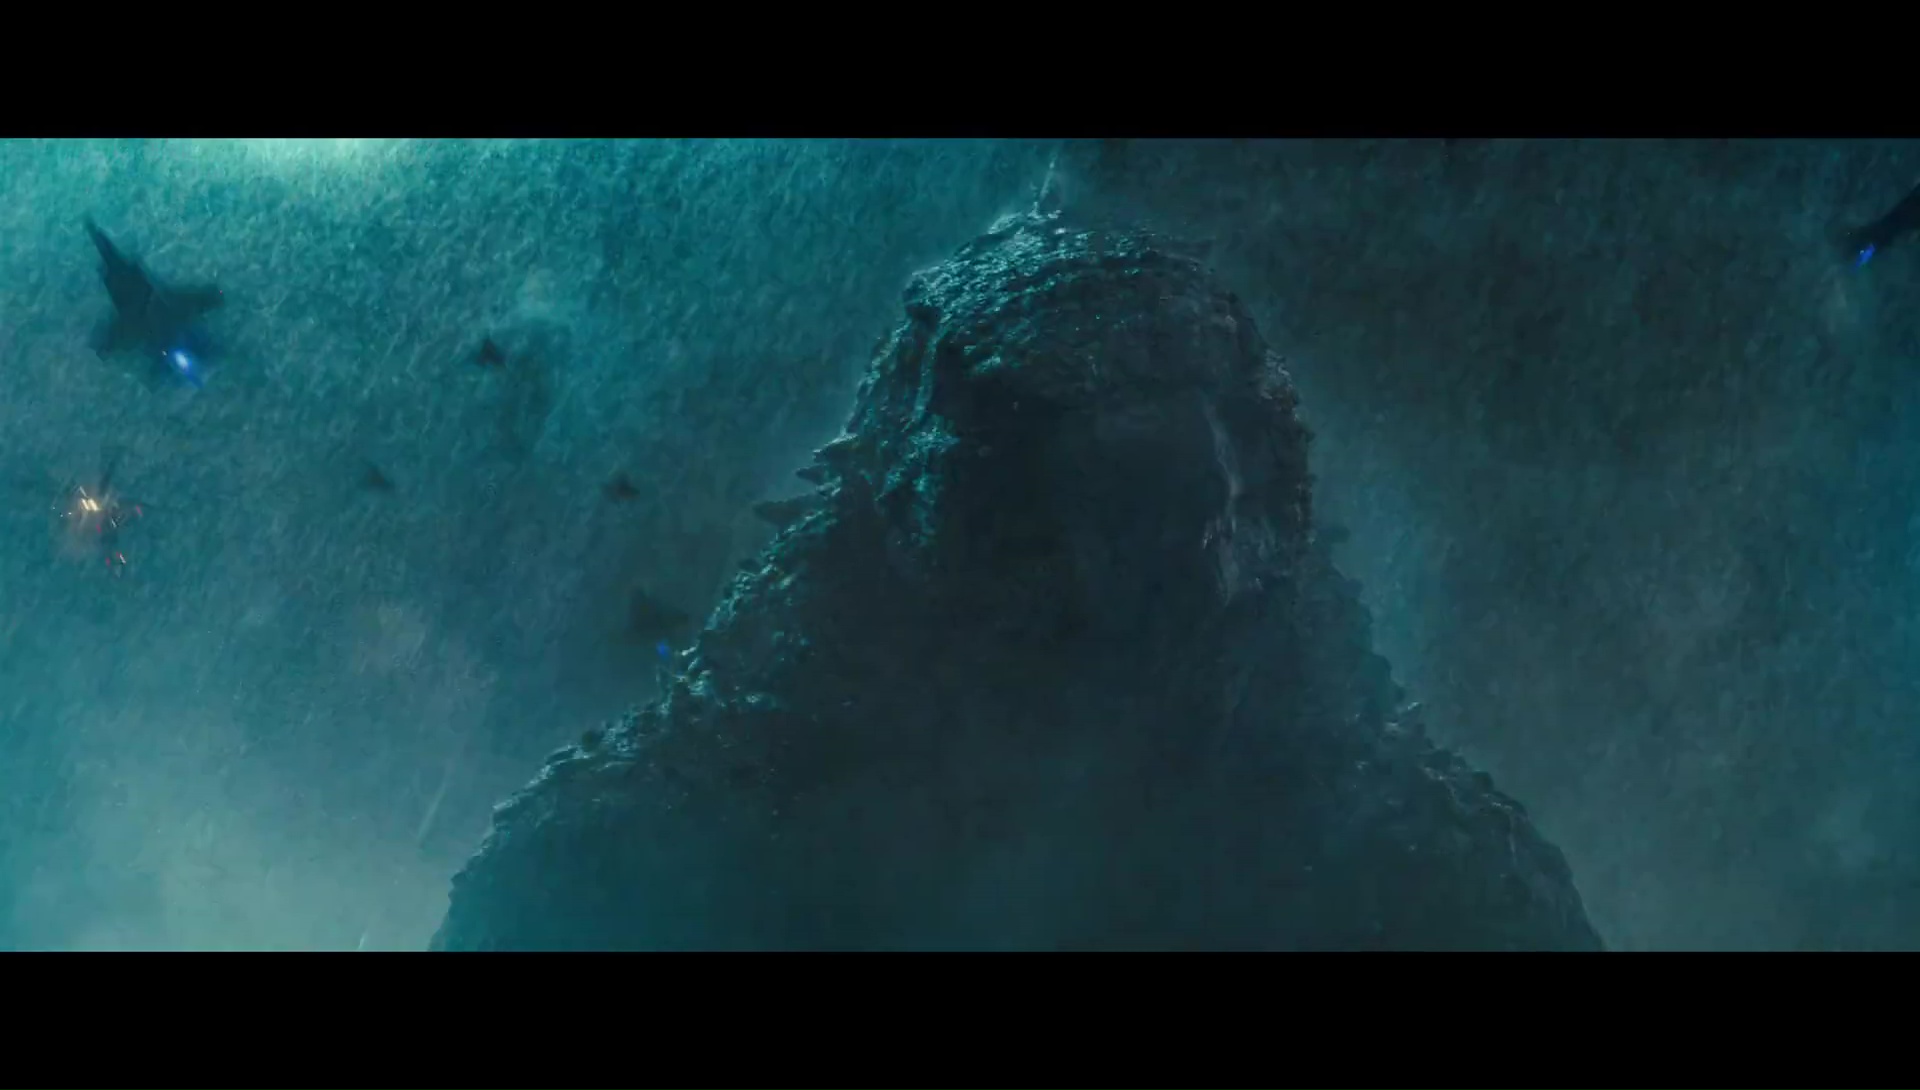 Godzilla 2: Godzilla's World TV Spot Screenshots